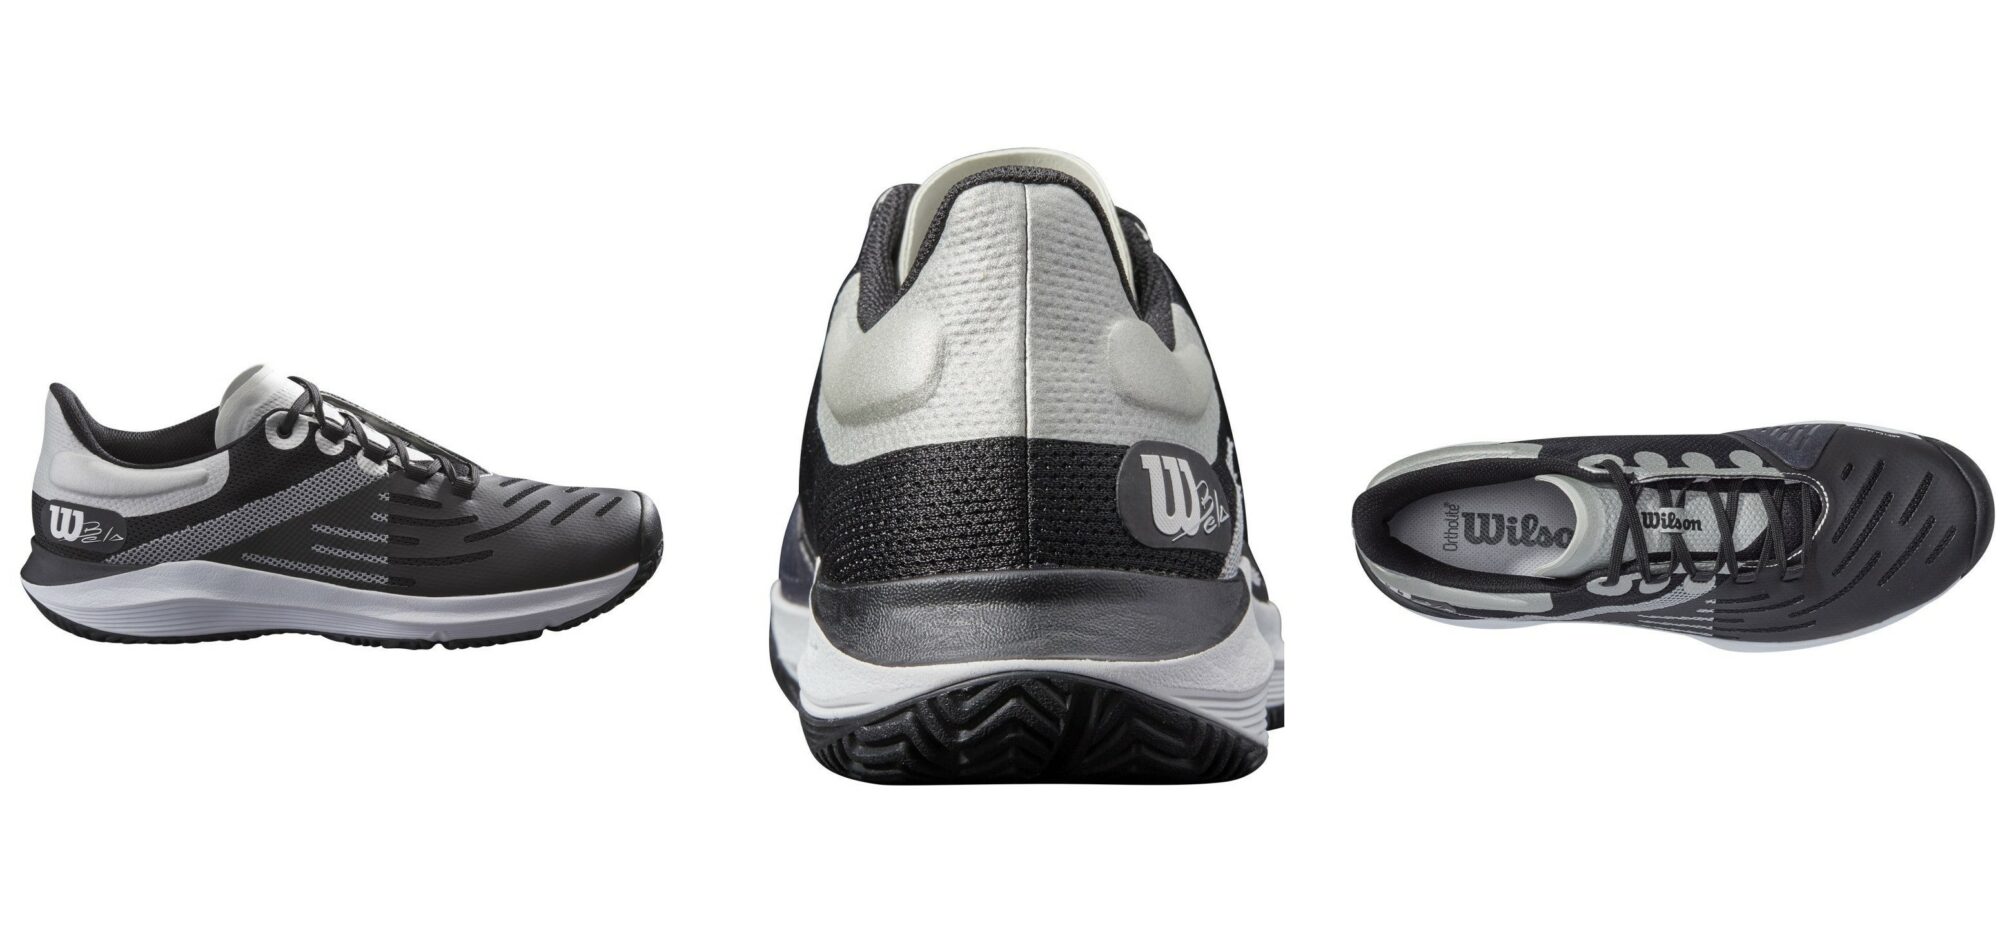 Wilson : les chaussures Kaos 3.0 Bela